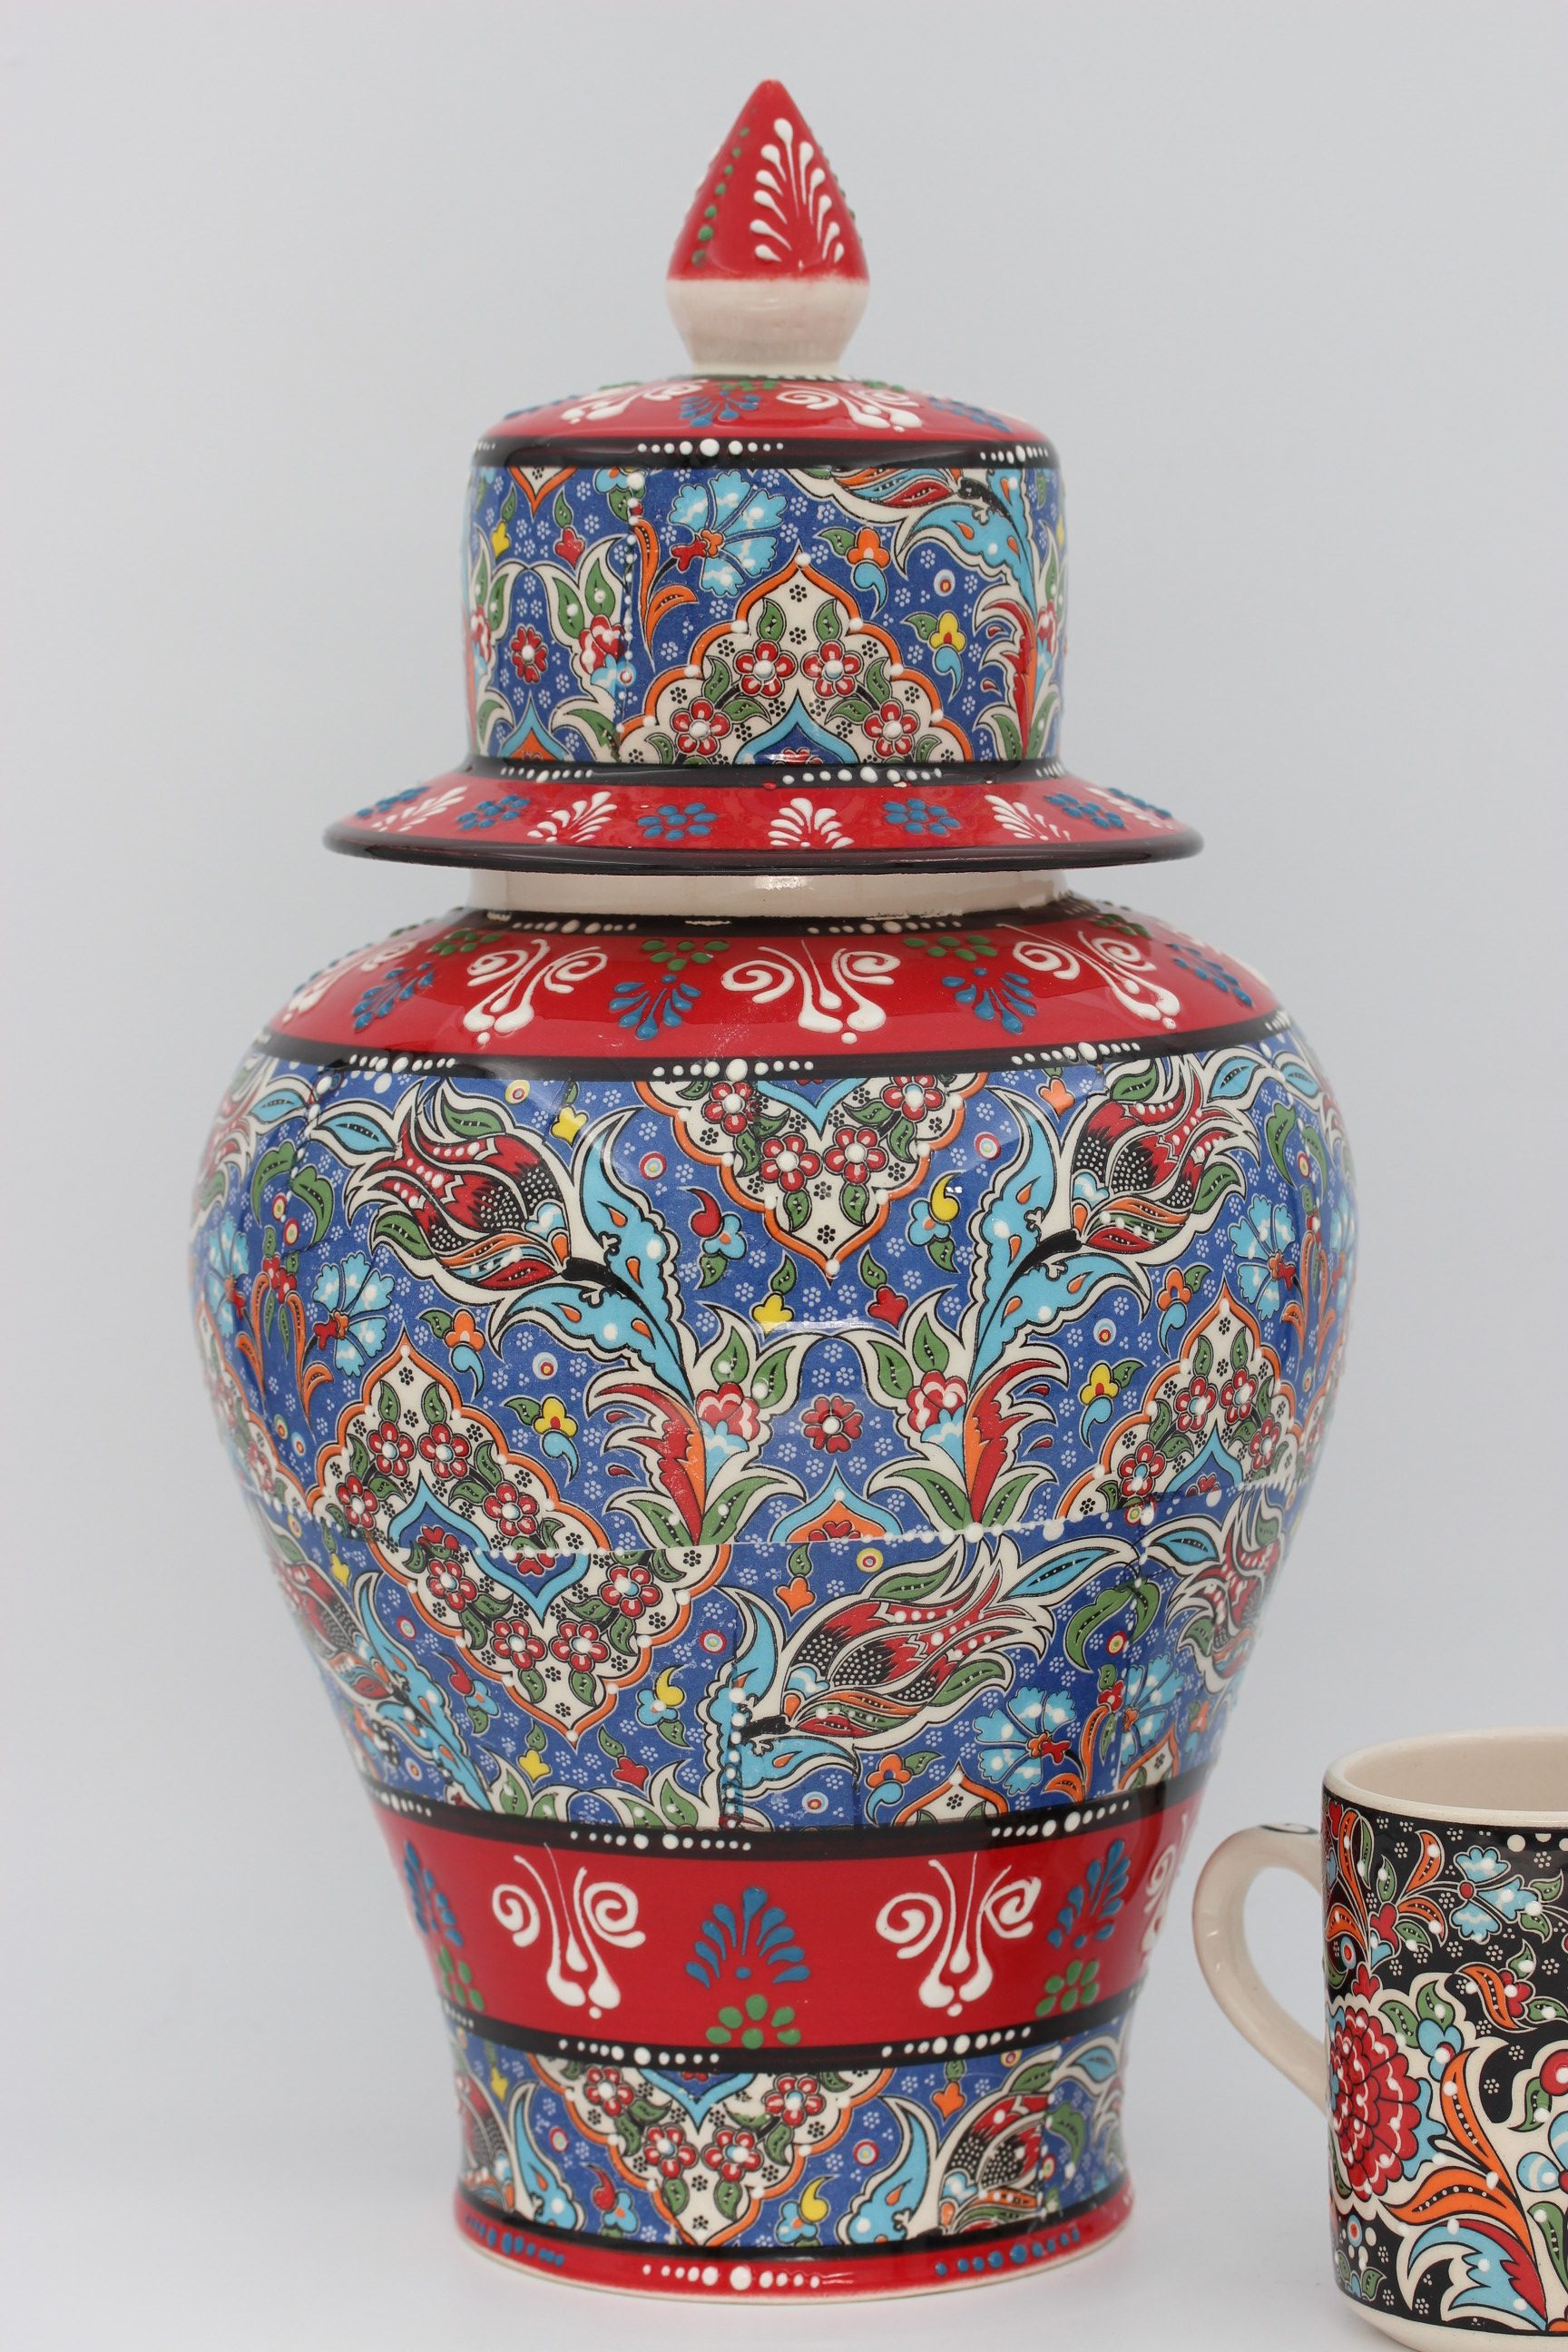 Cm Hand Made Colourful Turkish Ceramic Shah Vase S Designs To